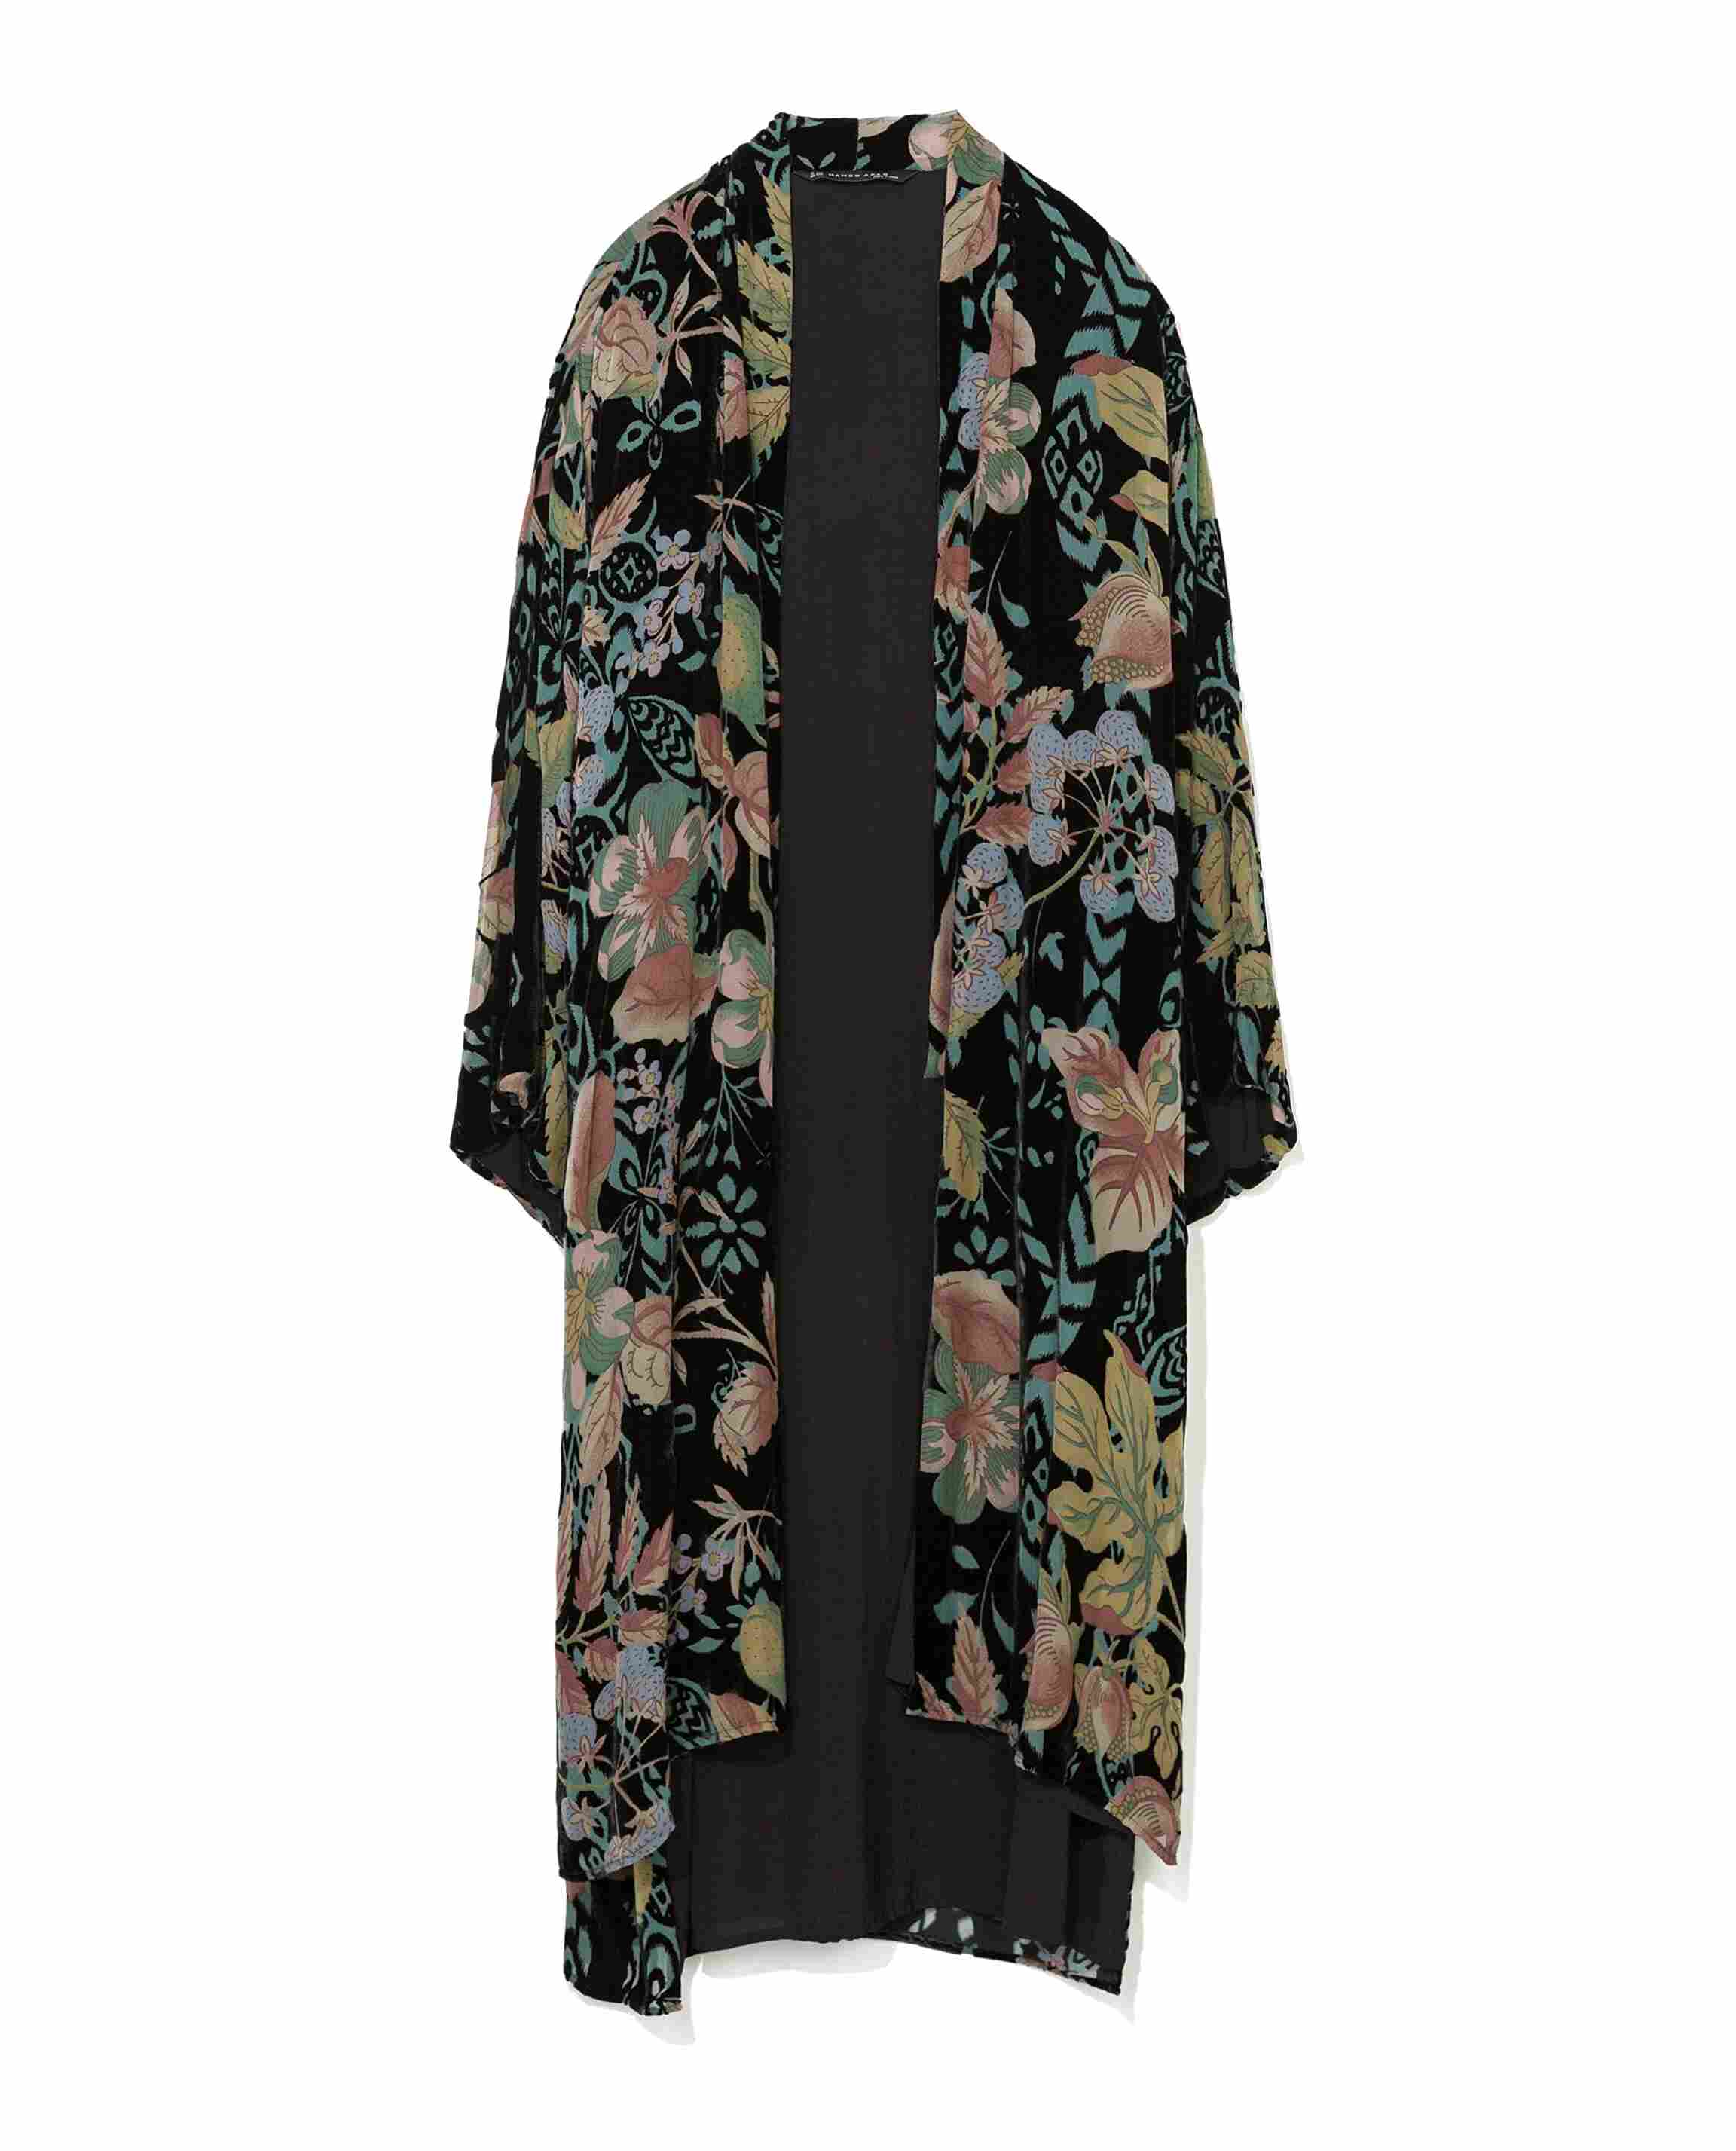 Zara Kimono Jacket for sale in UK | 60 used Zara Kimono Jackets